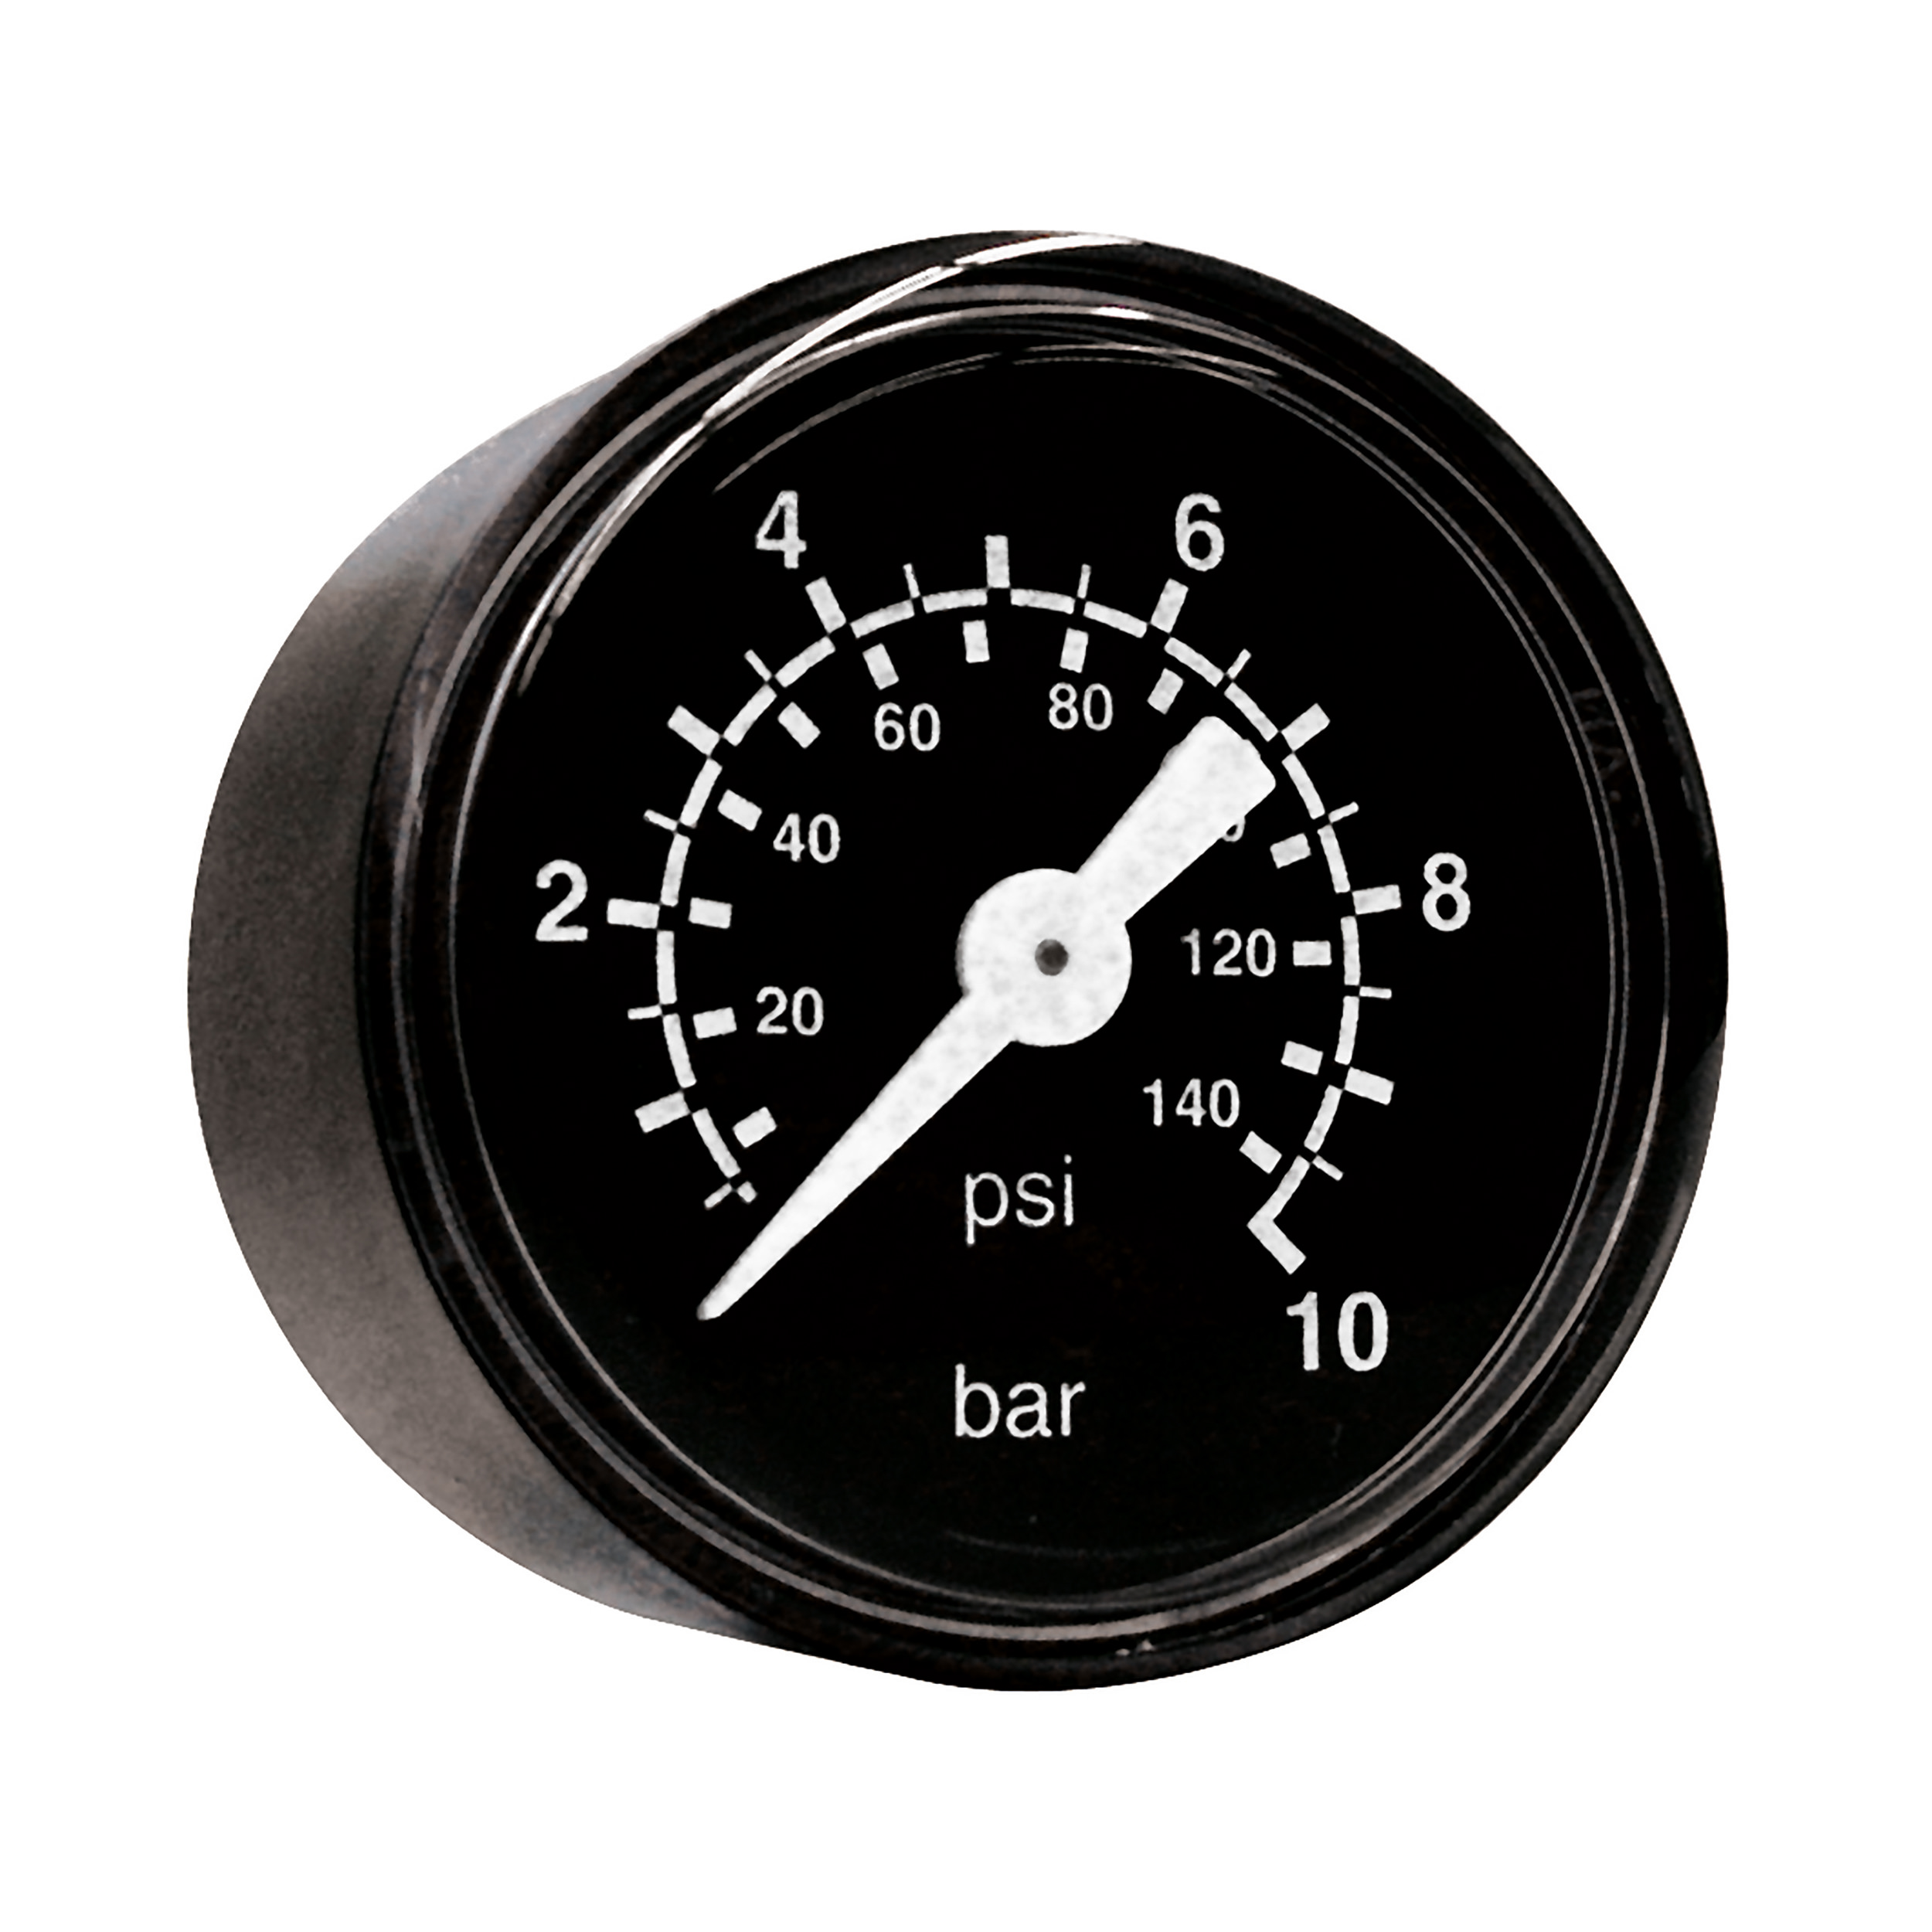 Bourdon-tube gauge Ø40, class 2.5, base/imprint: black/white, horizontal connection: G¼, display range: 0–232 psi